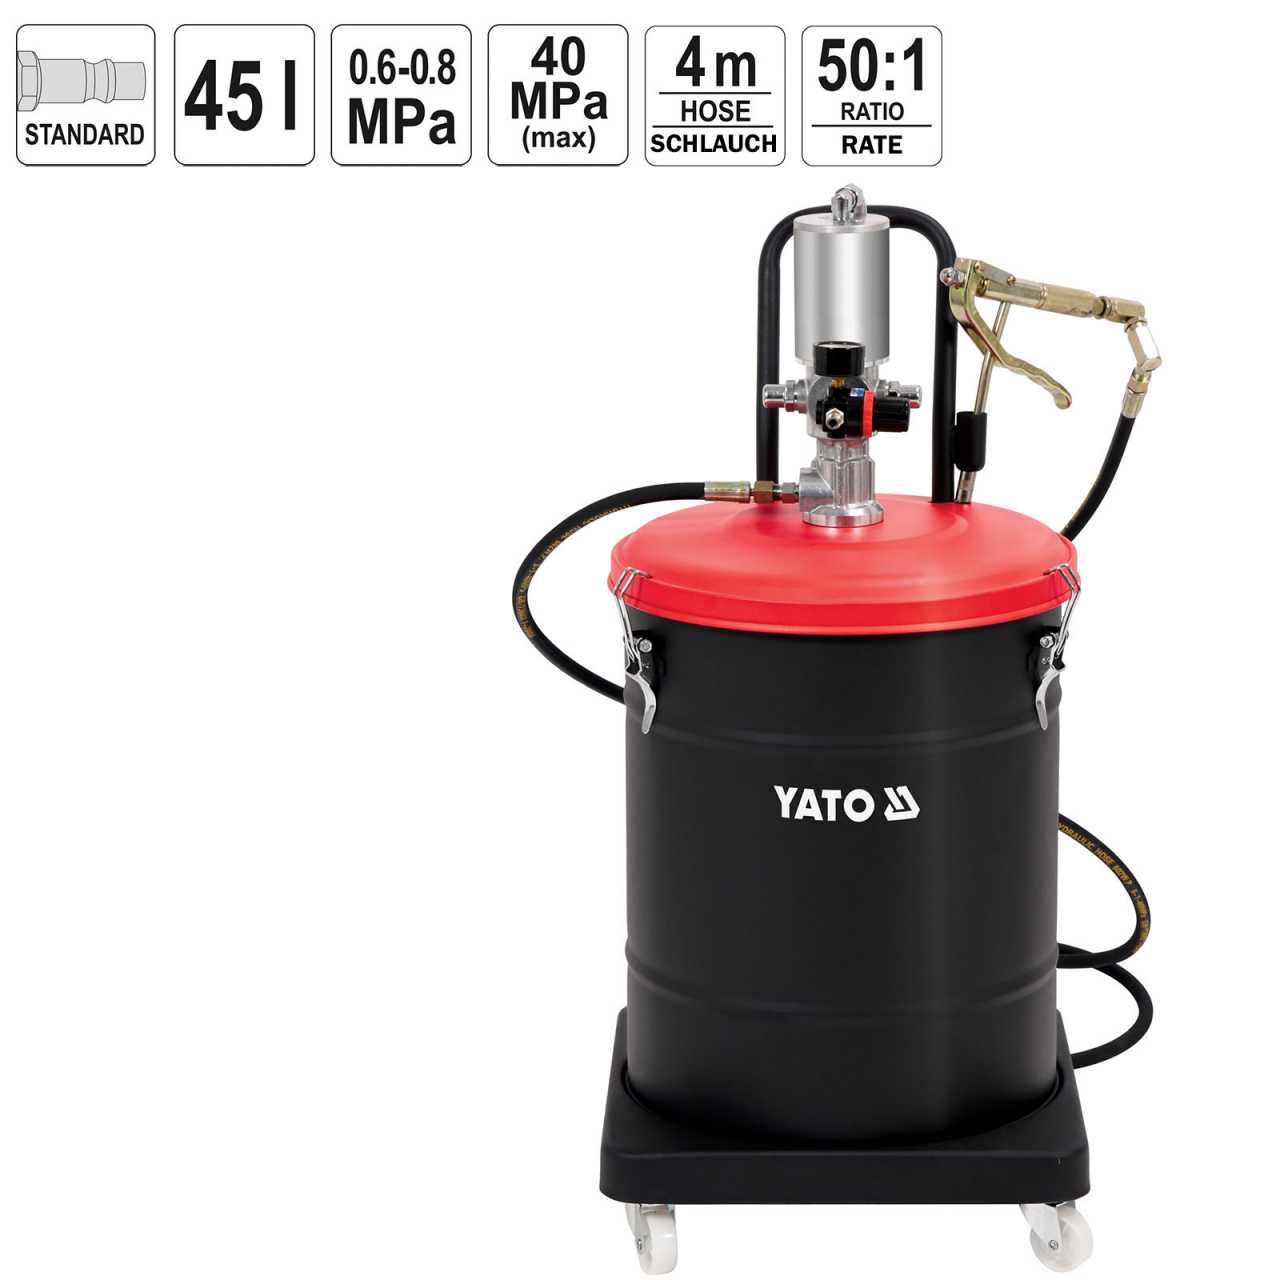 YATO Profi Pneumatik-Fettpresse 45 Liter | 40 MPa YT-07069